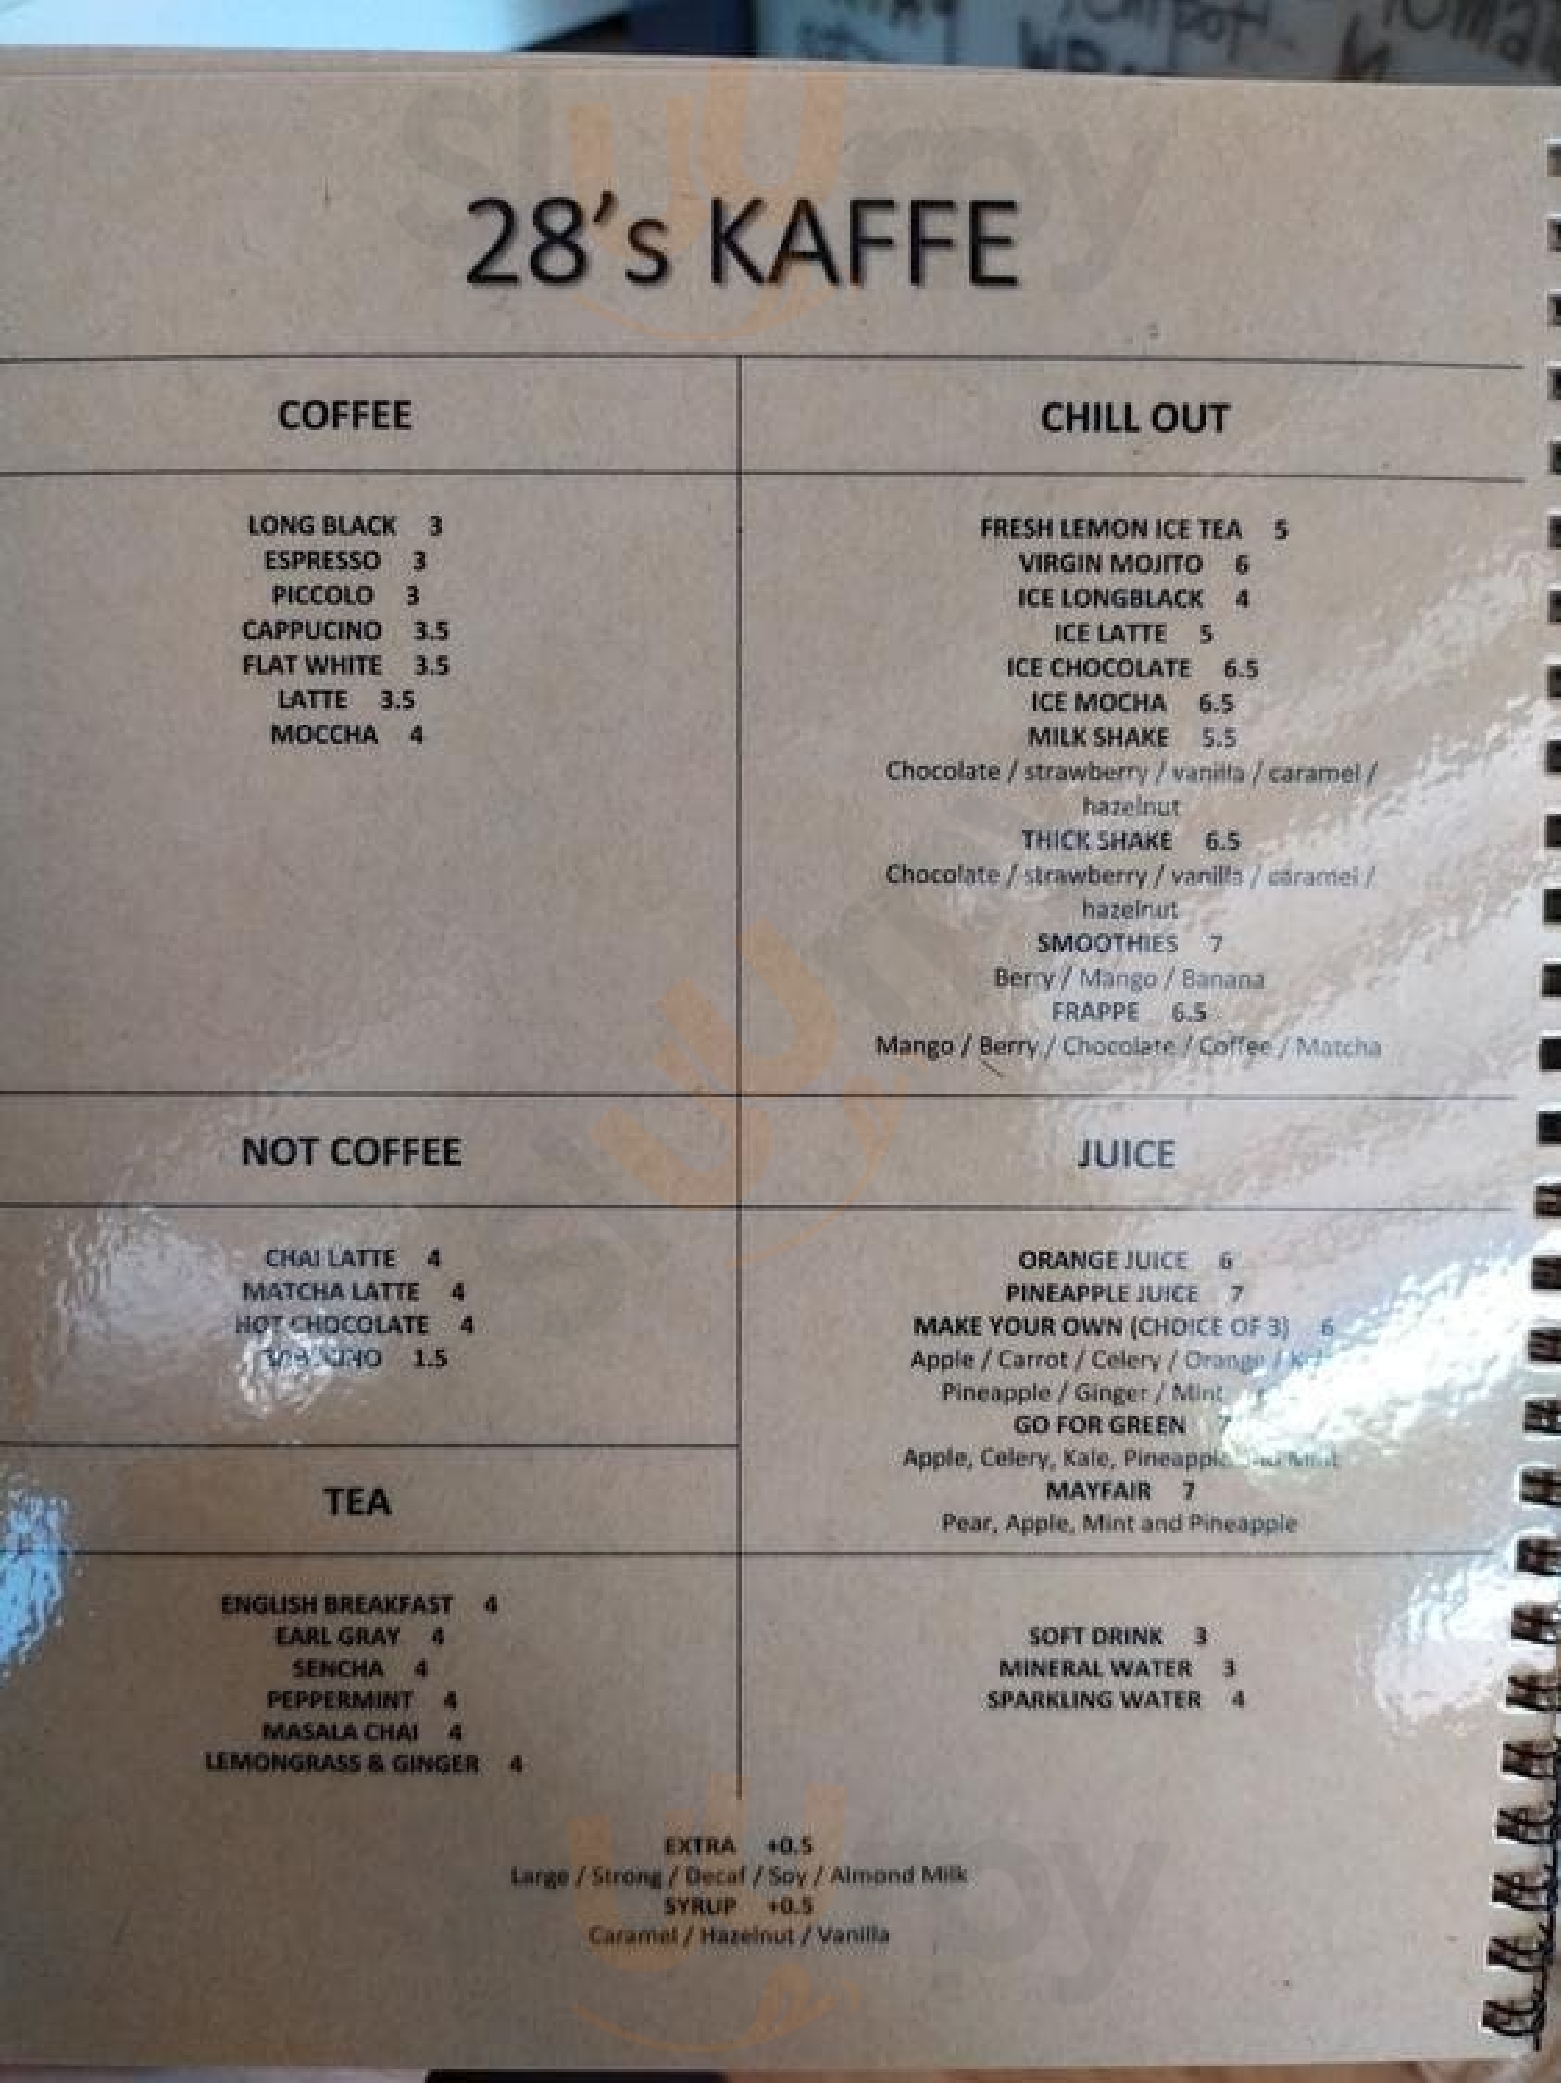 28's Kaffe North Sydney Menu - 1